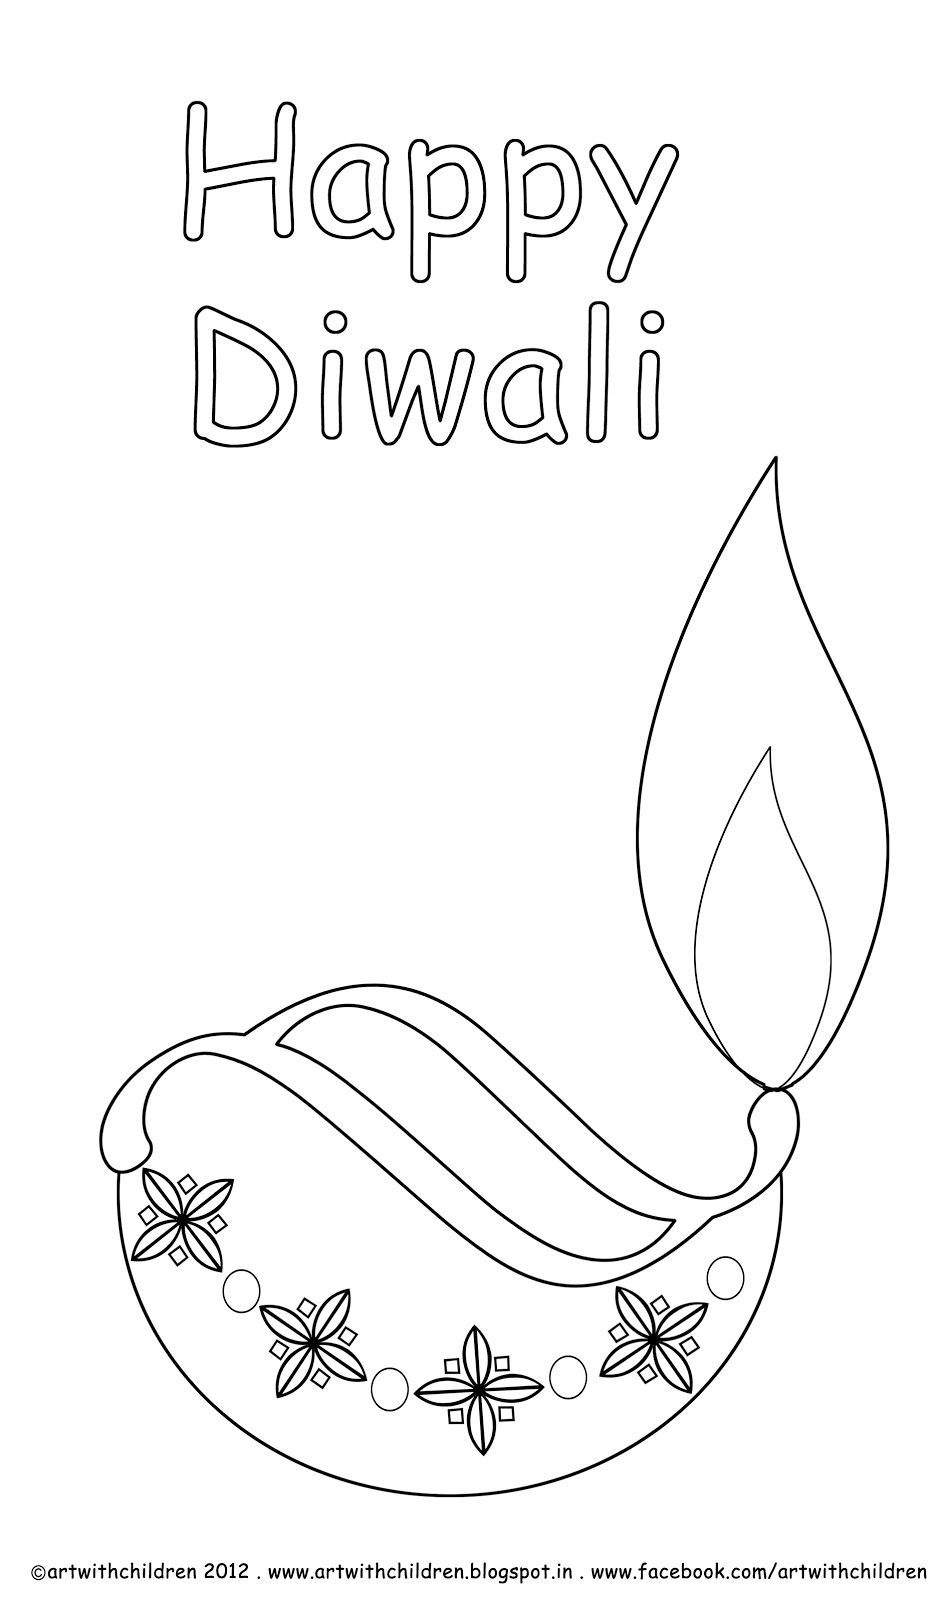 diya pictures to colour diwali coloring pages diwali diya coloring pages free to colour pictures diya 